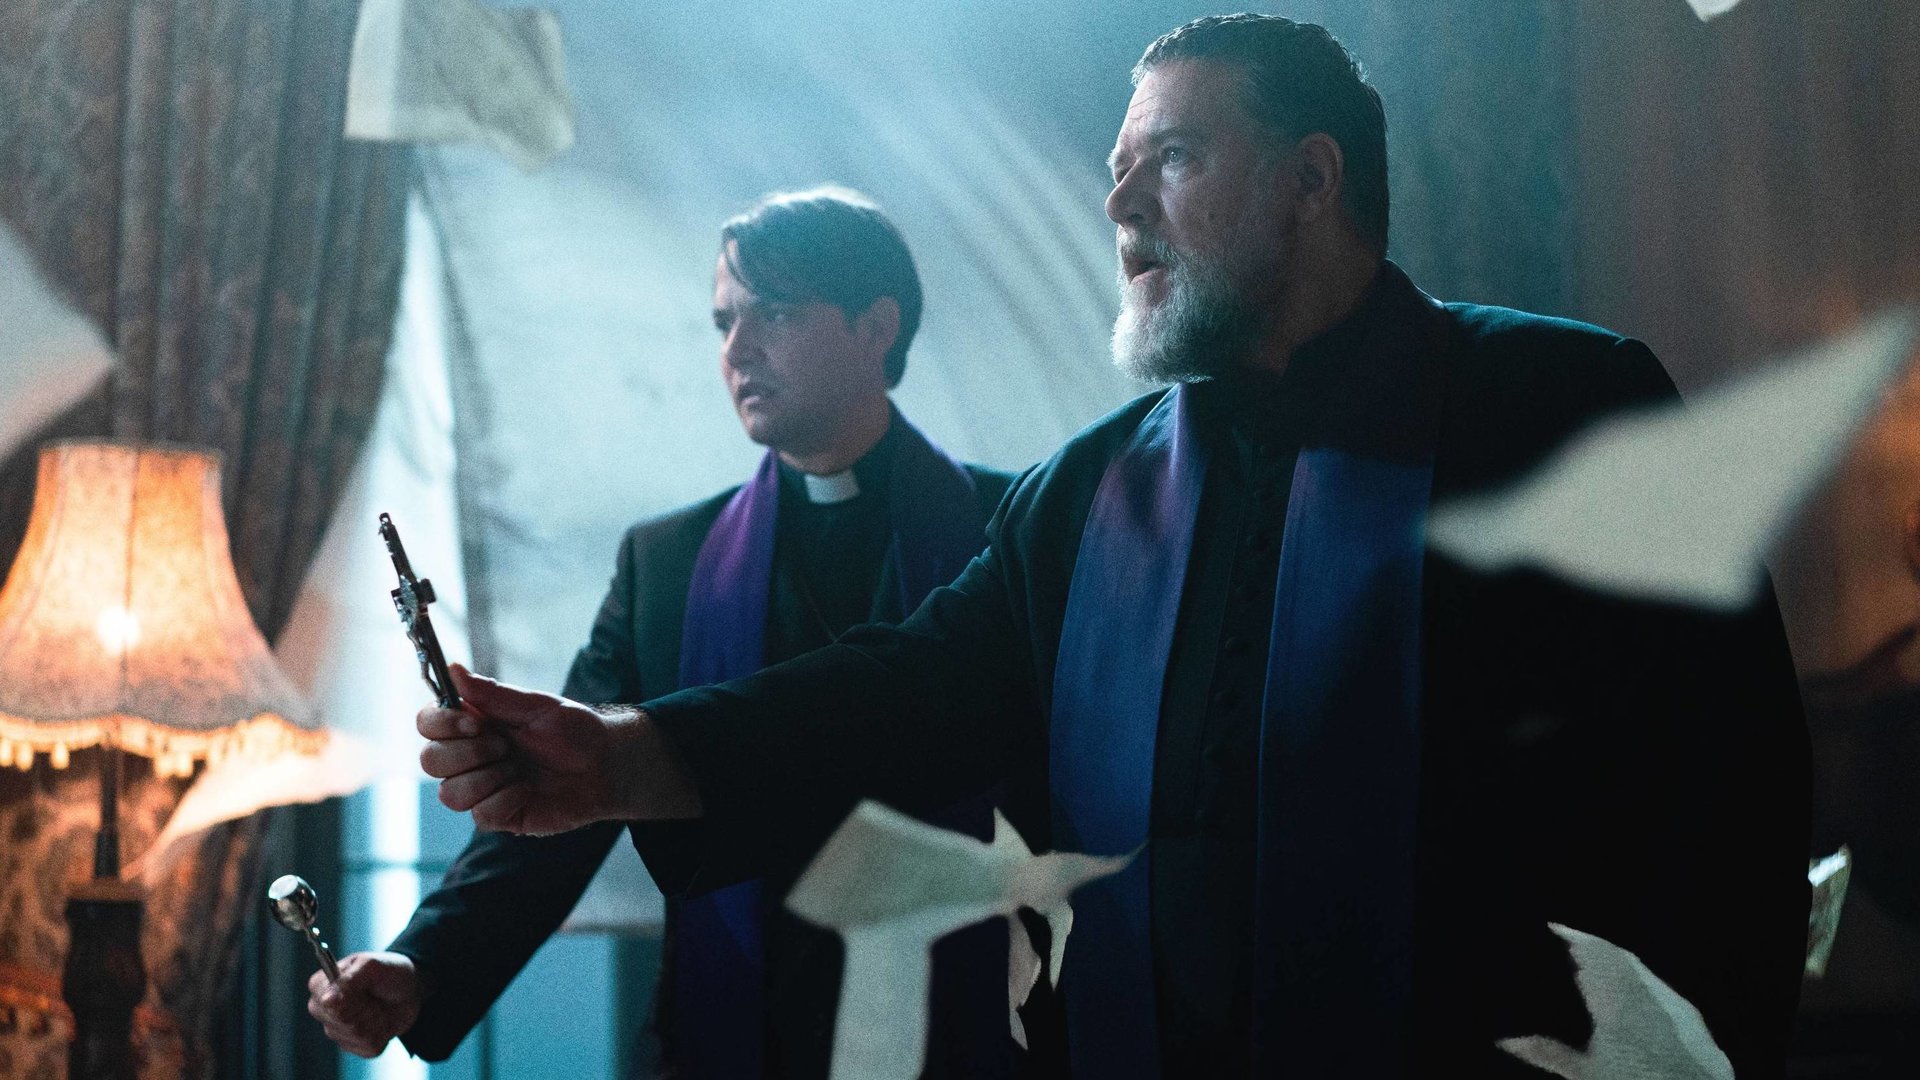 #Russell-Crowe-Horror „The Pope's Exorcist” enttäuscht: Ist das Exorzismus-Genre noch zu retten?